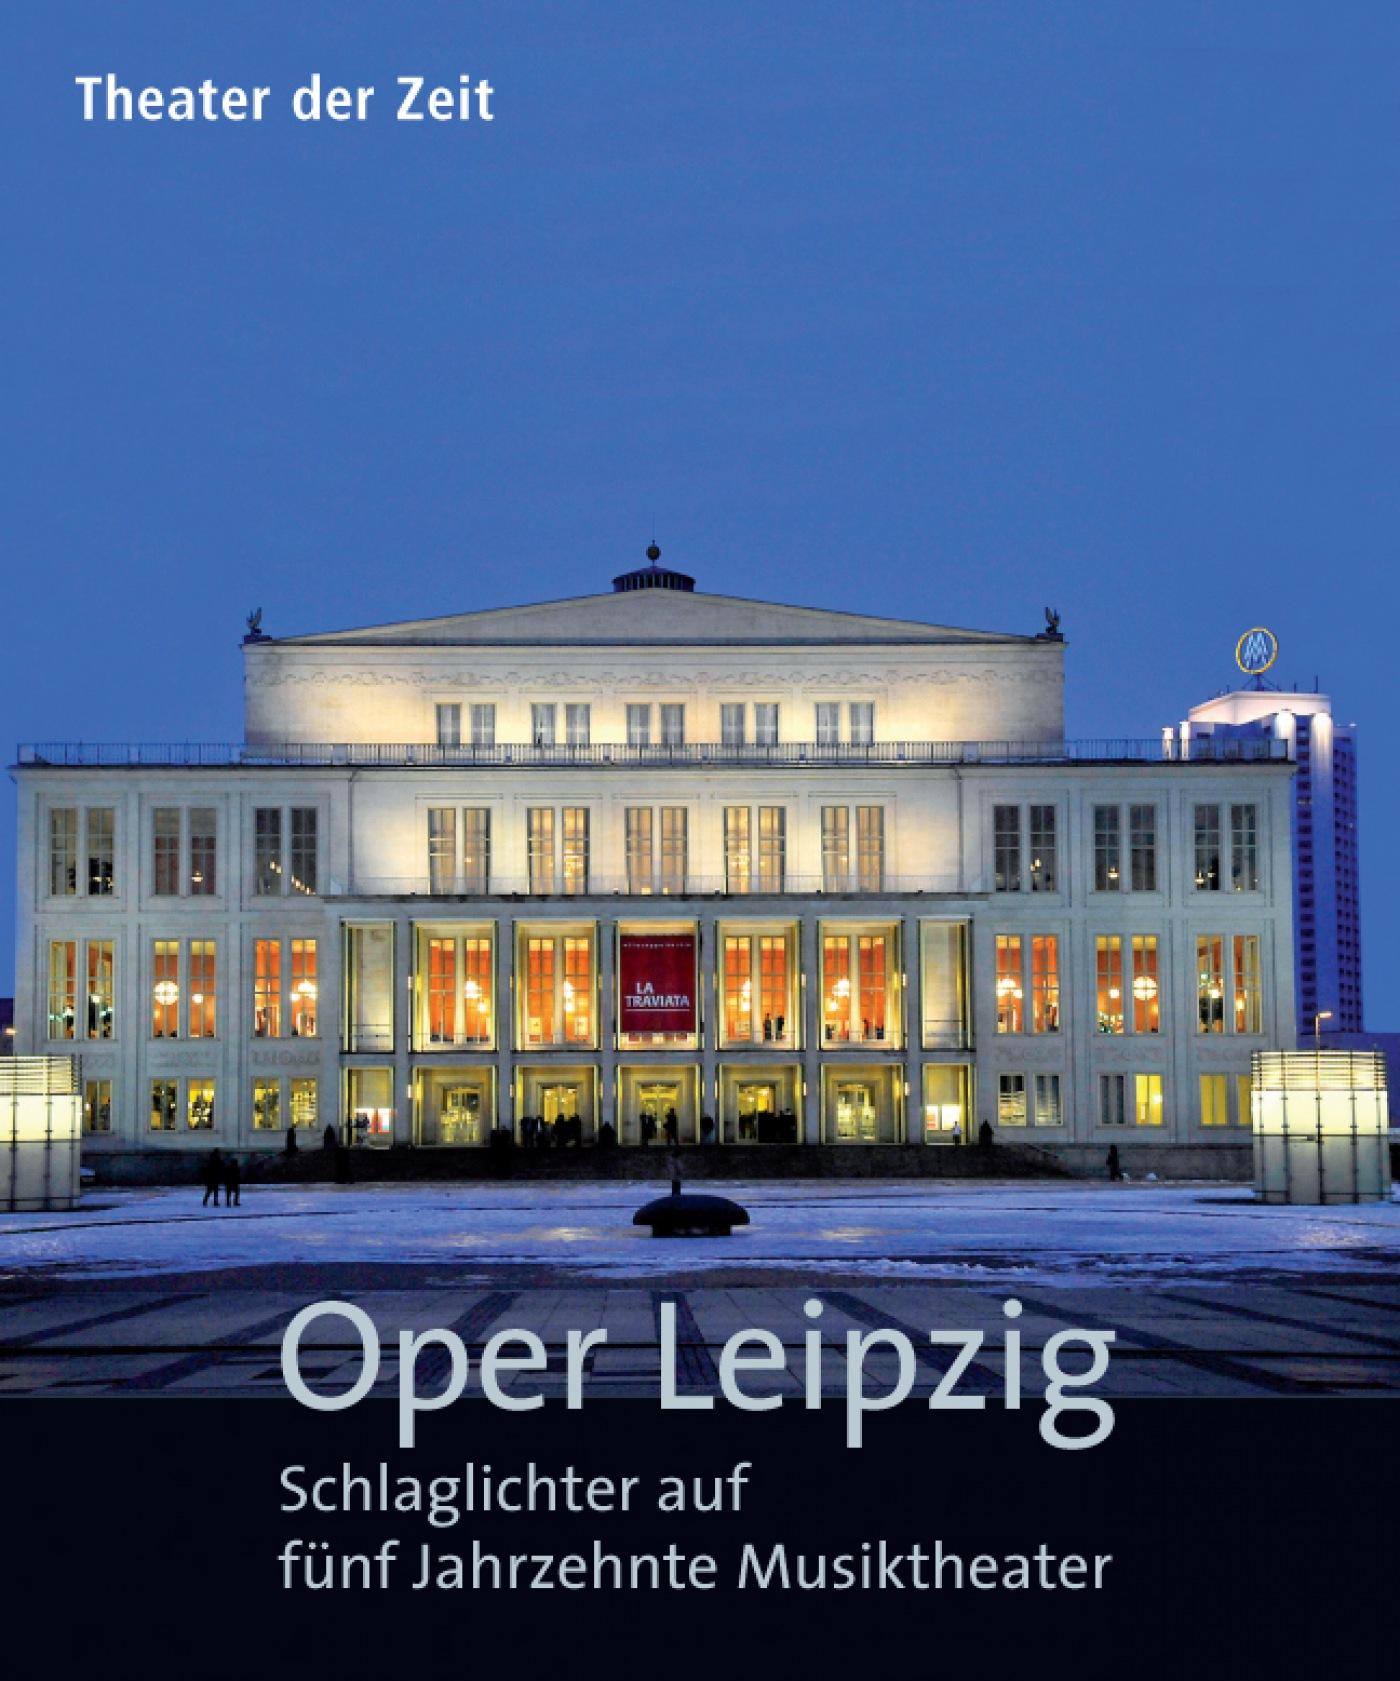 "Oper Leipzig"